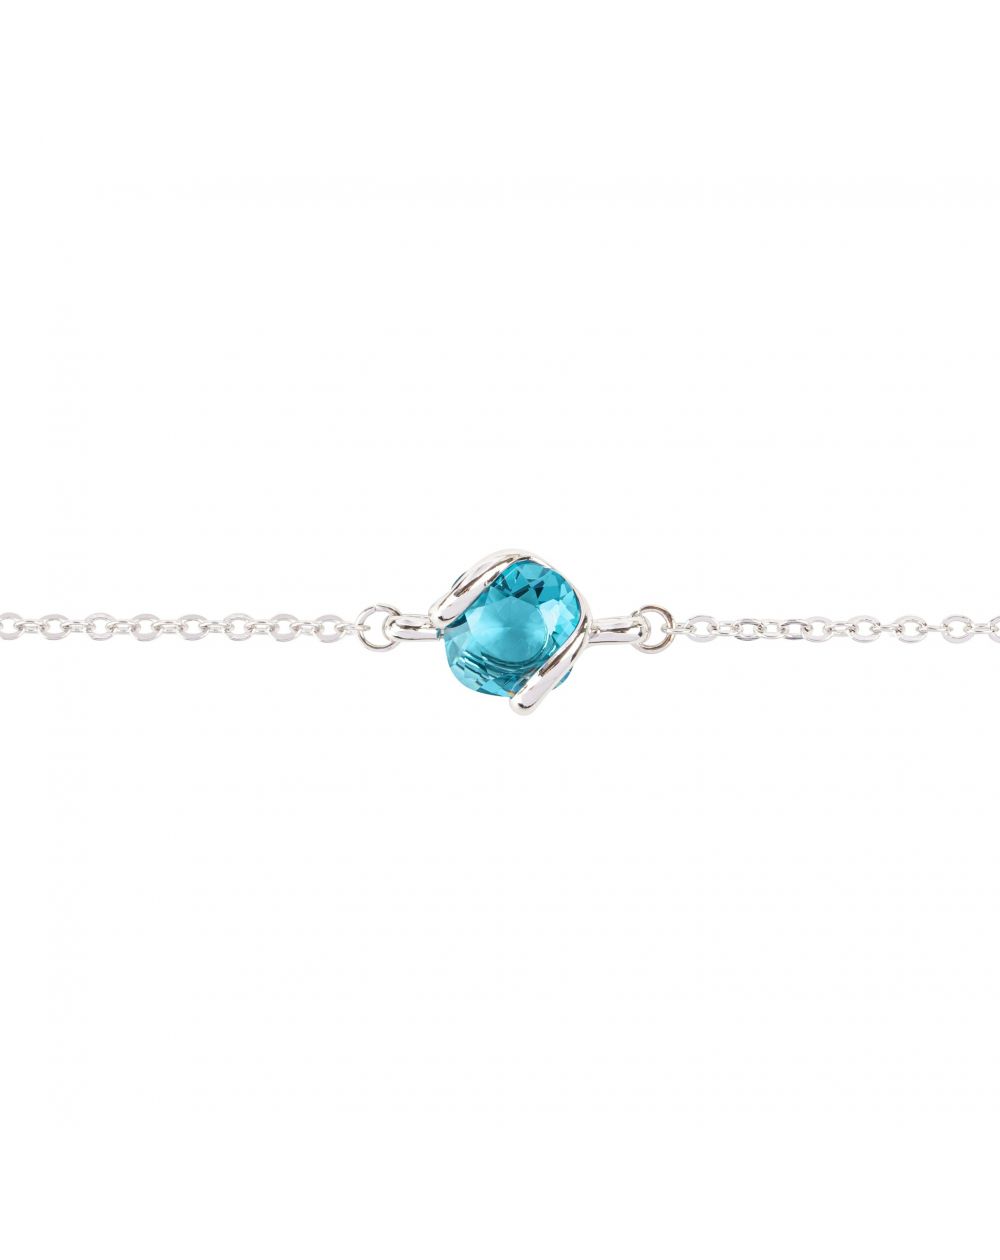 Andrea Marazzini bijoux - Bracelet cristal Swarovski Mini Turquoise